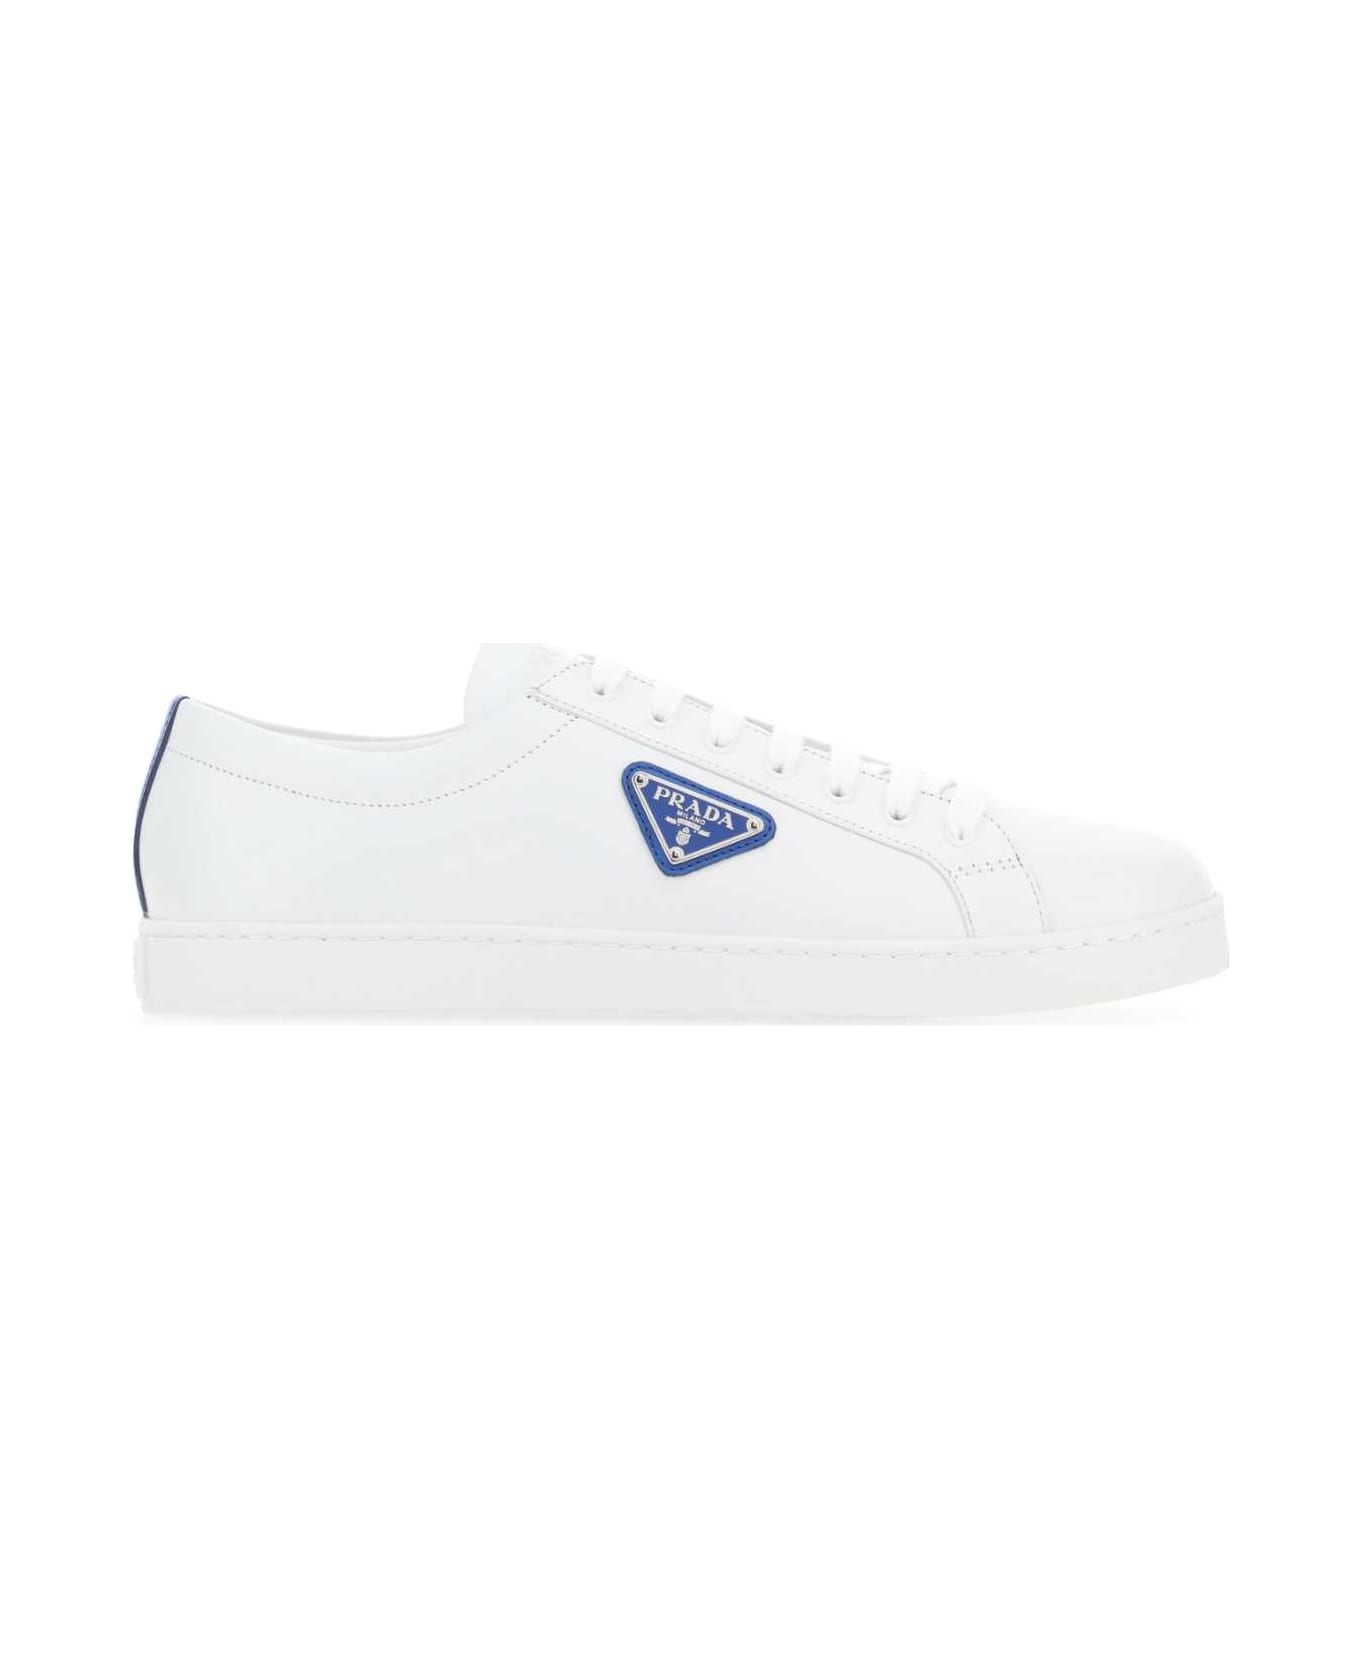 Prada White Leather Sneakers - Multicolor スニーカー